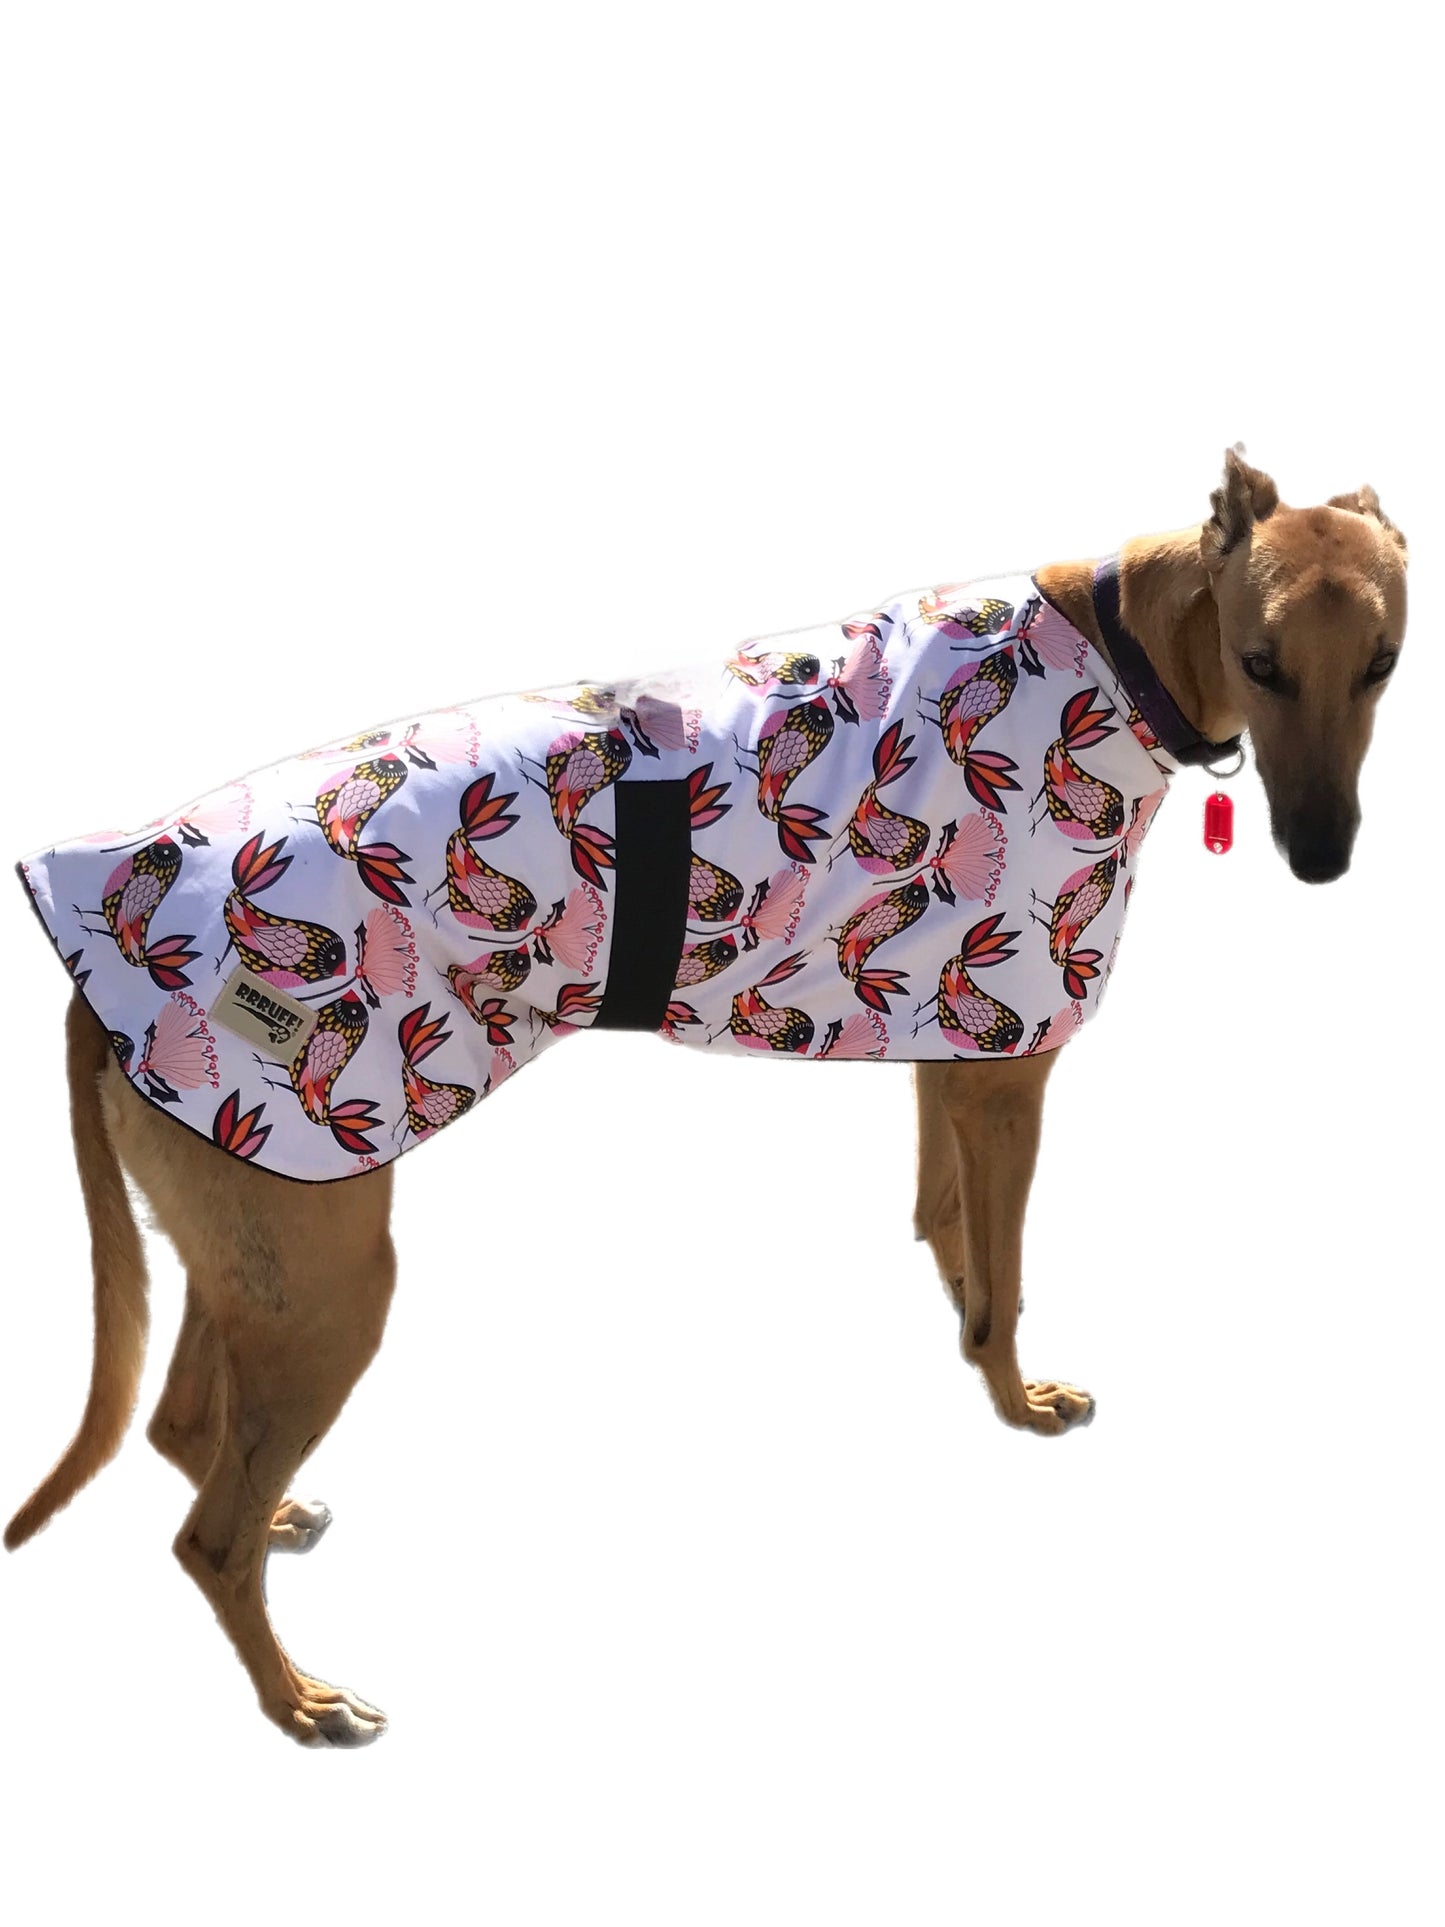 Spring range Greyhound coat in ‘birdy’ design cotton & fleece washable